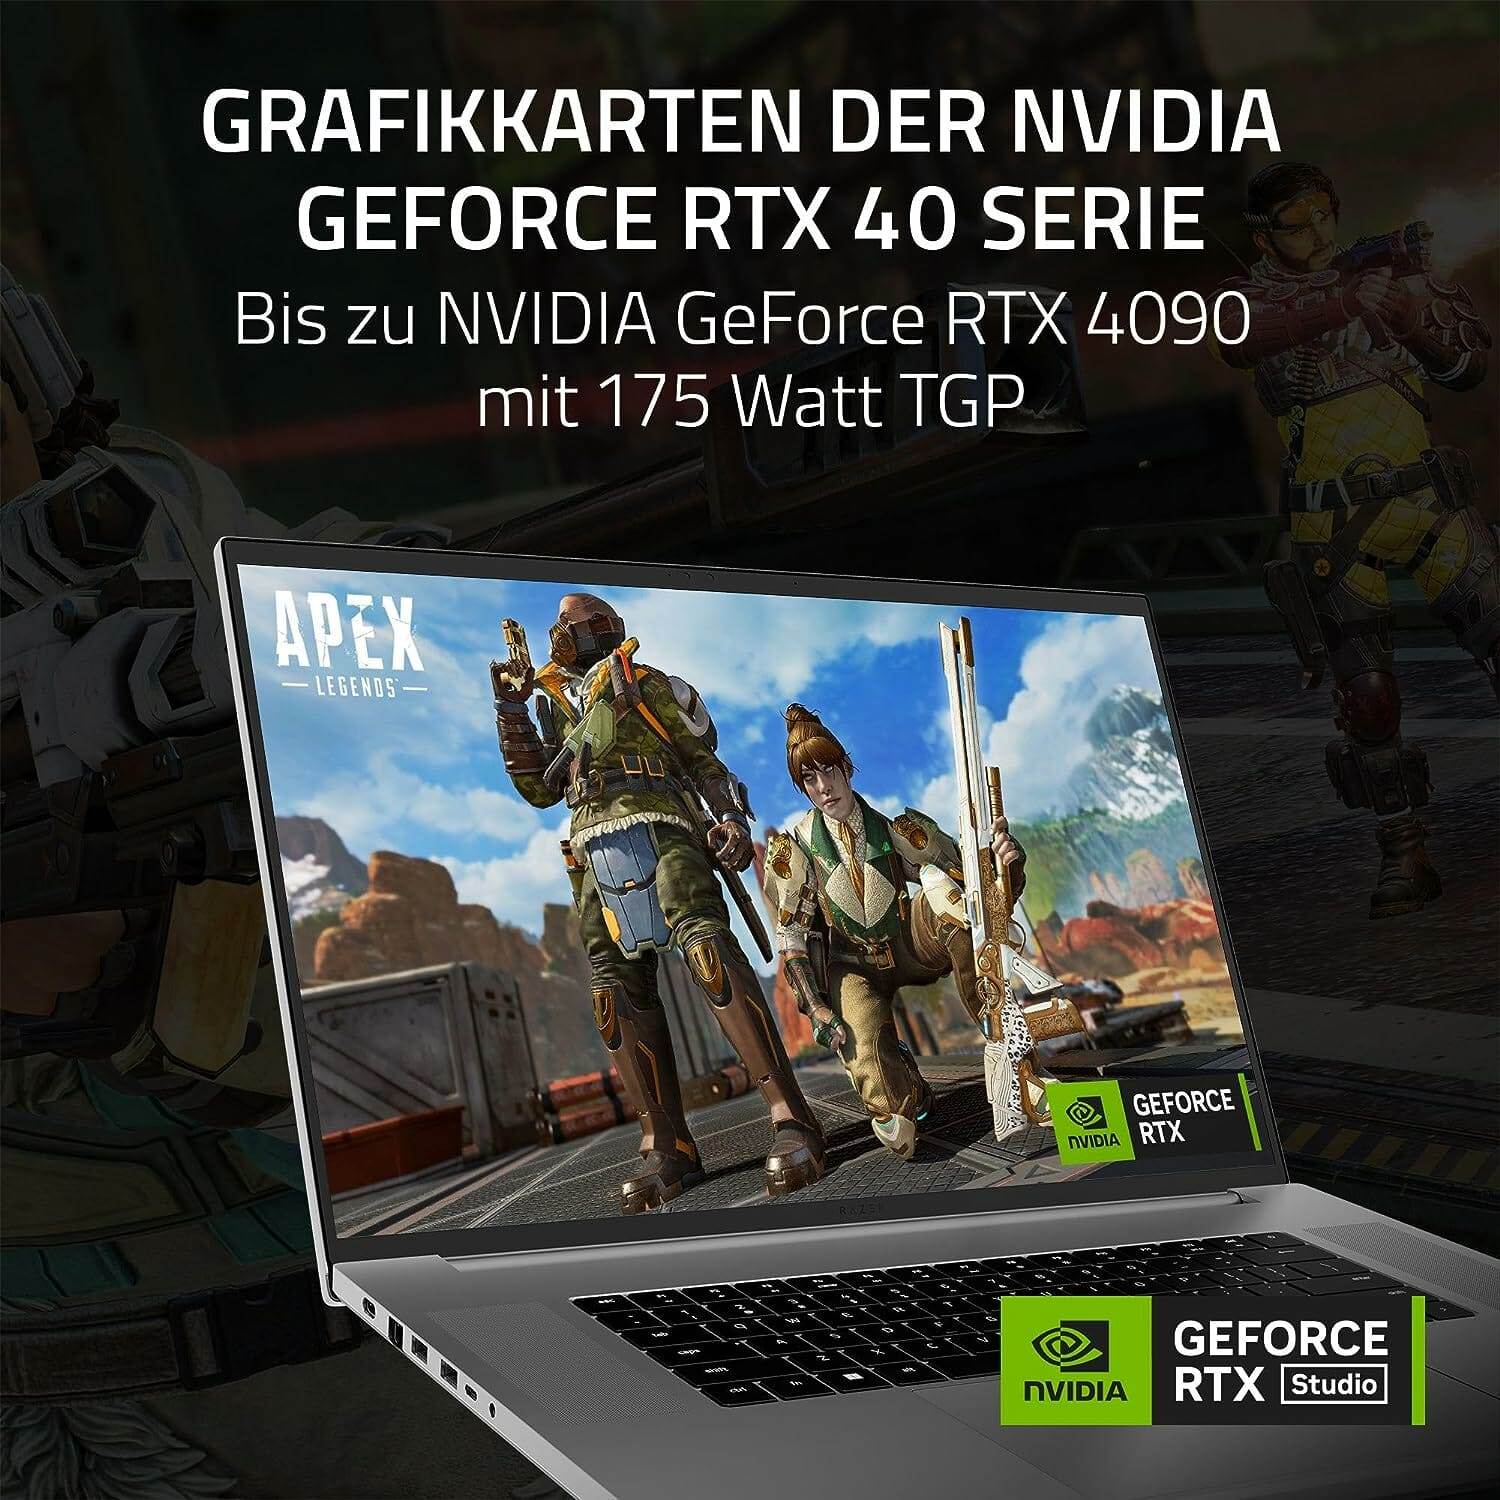 Nvidia GeForce RTX 480-Serie.